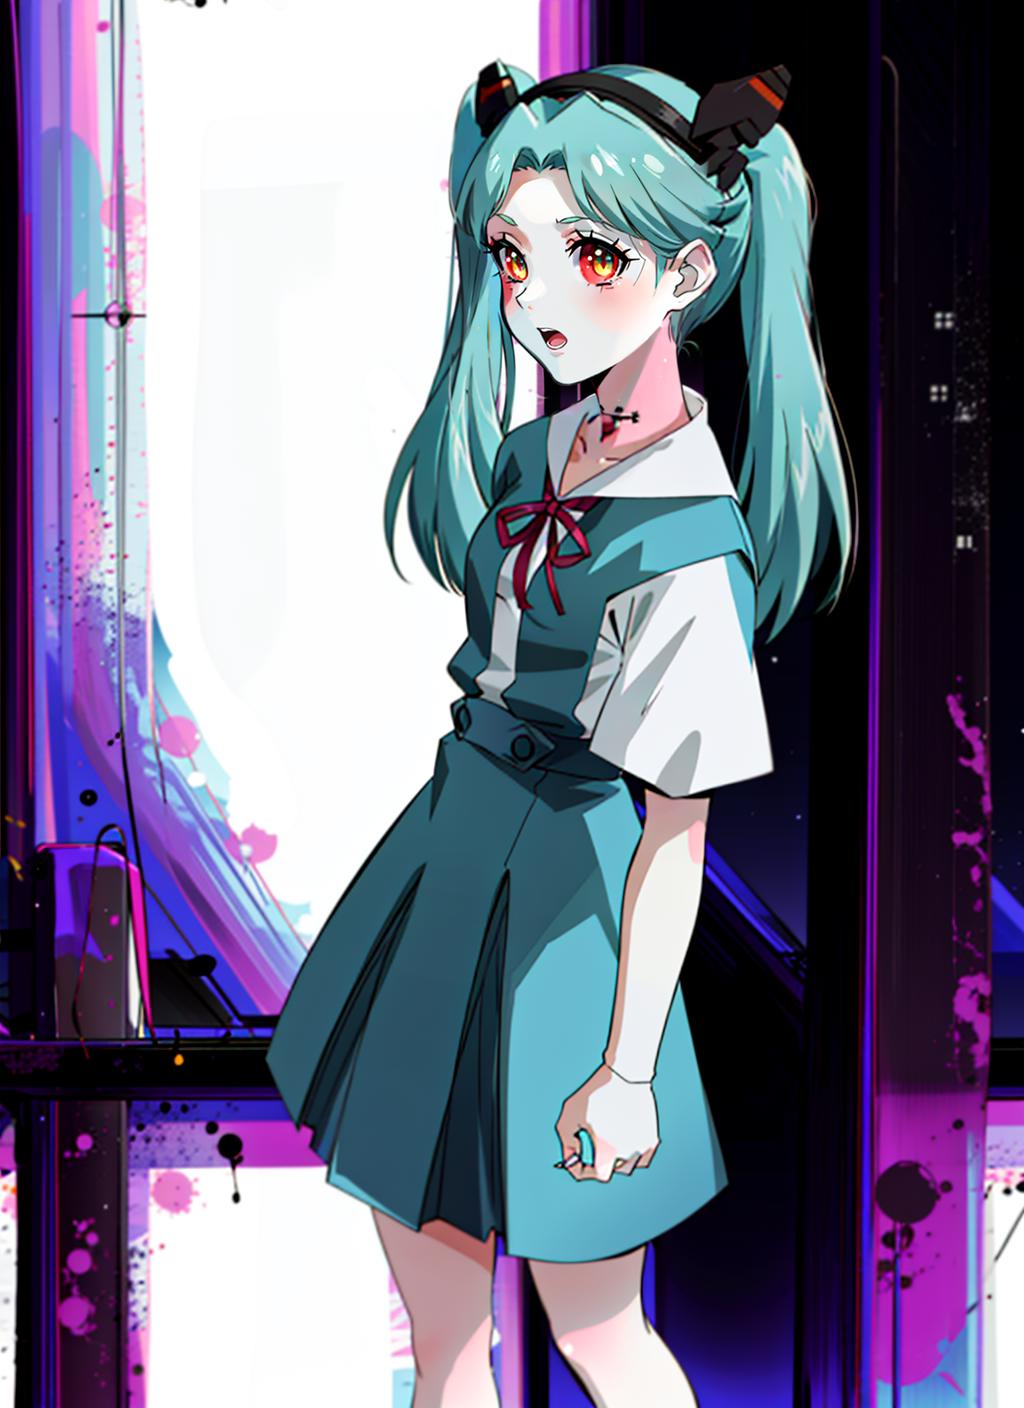 Evangelion school uniforms - Neon Genesis Evangelion image by Aogiba